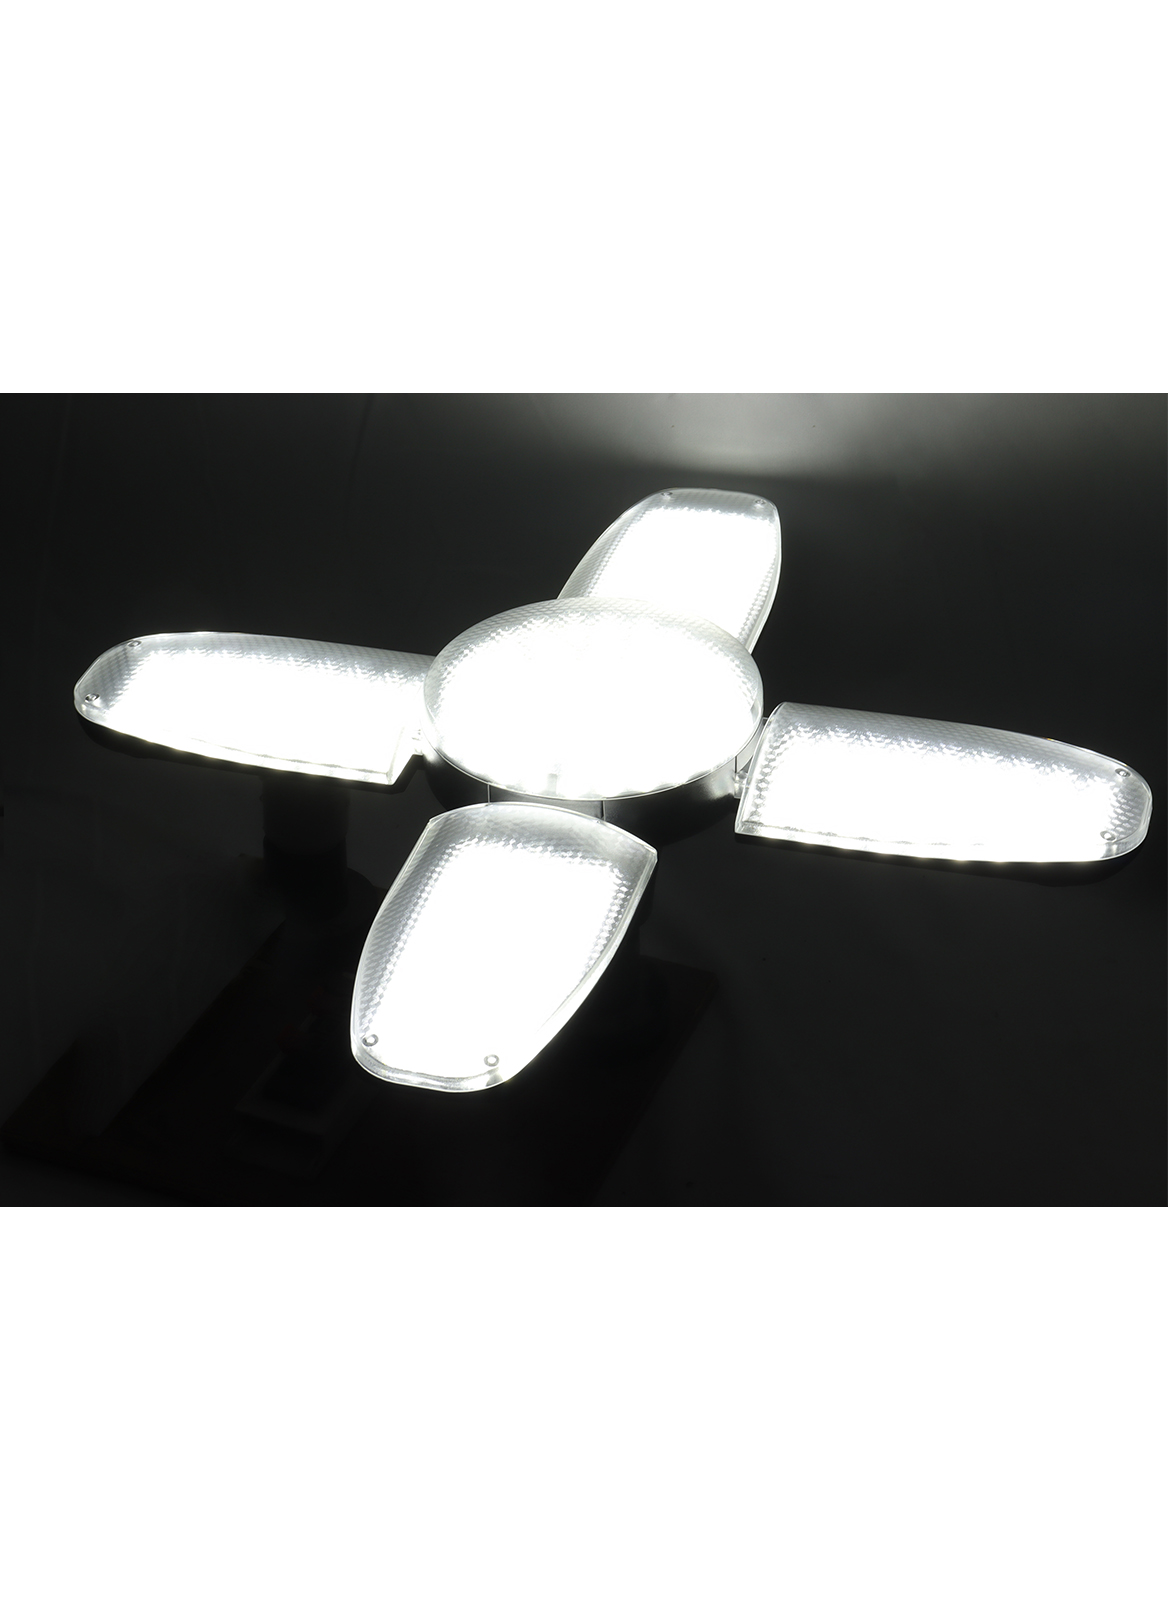 LED Multi Angle Folding Deformation Light 80W